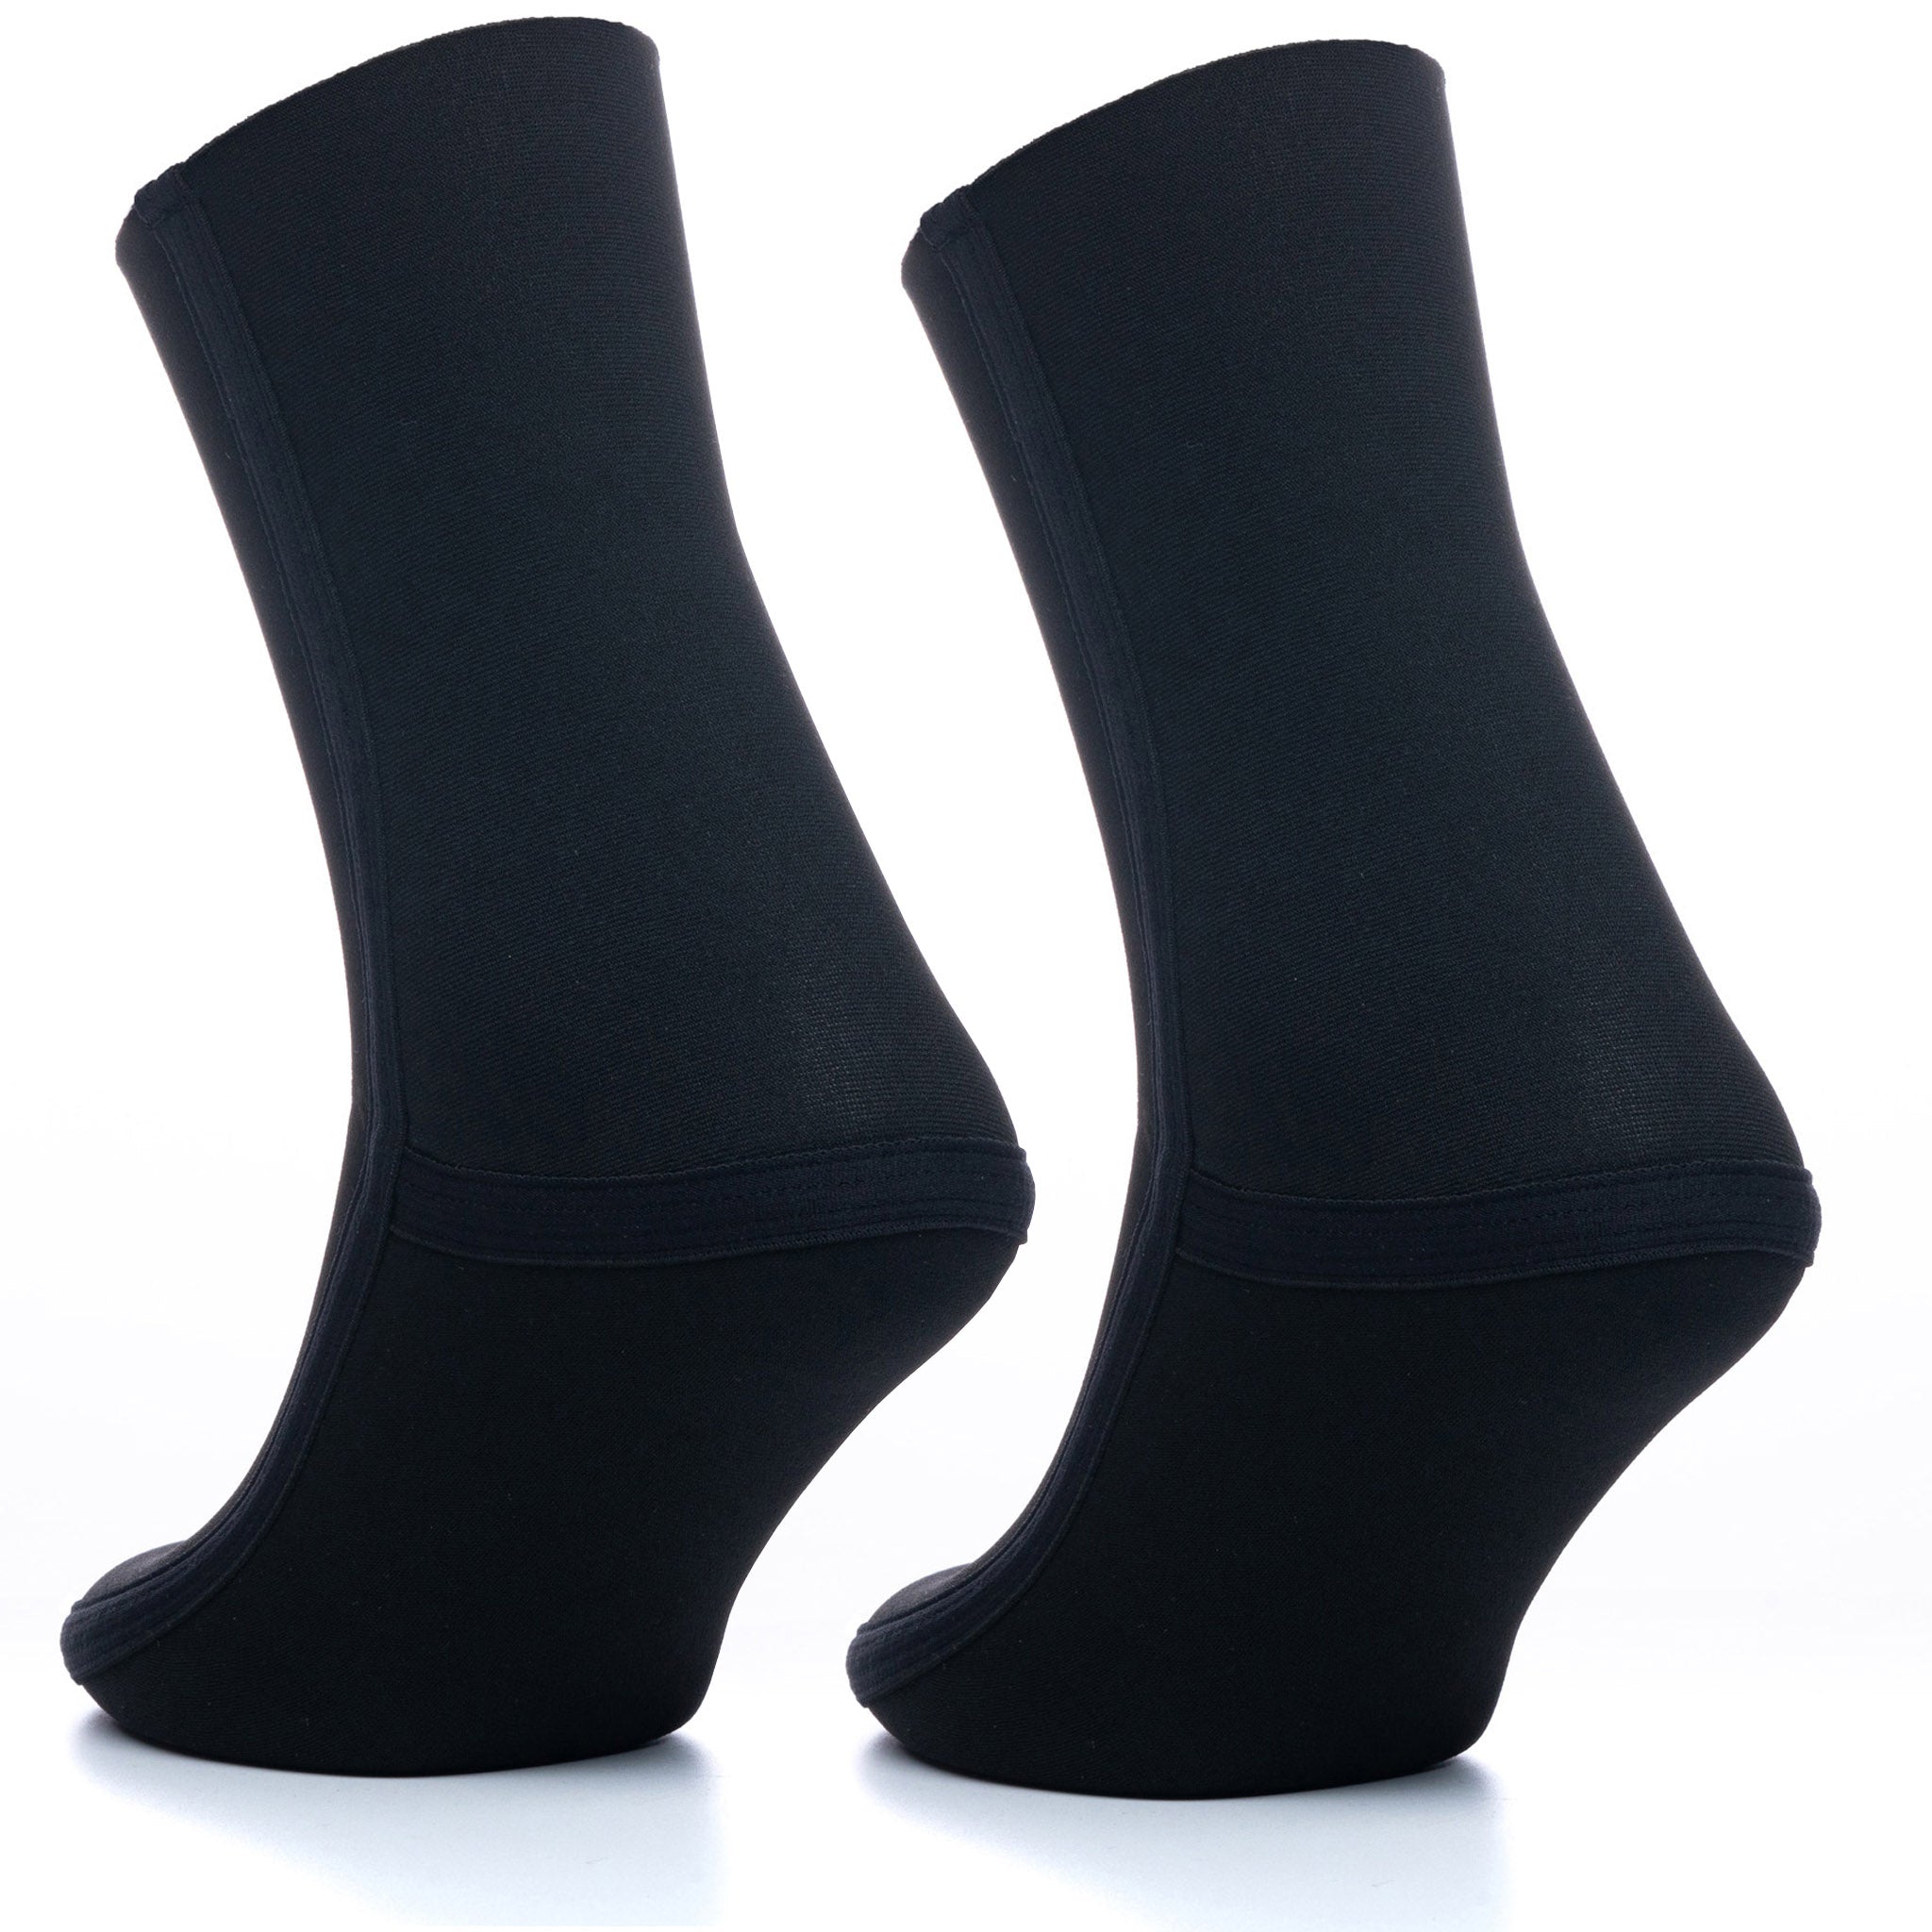 C-Skins 2.5mm Neoprene Wetsuit Socks in both Junior & Adult Sizes | Side